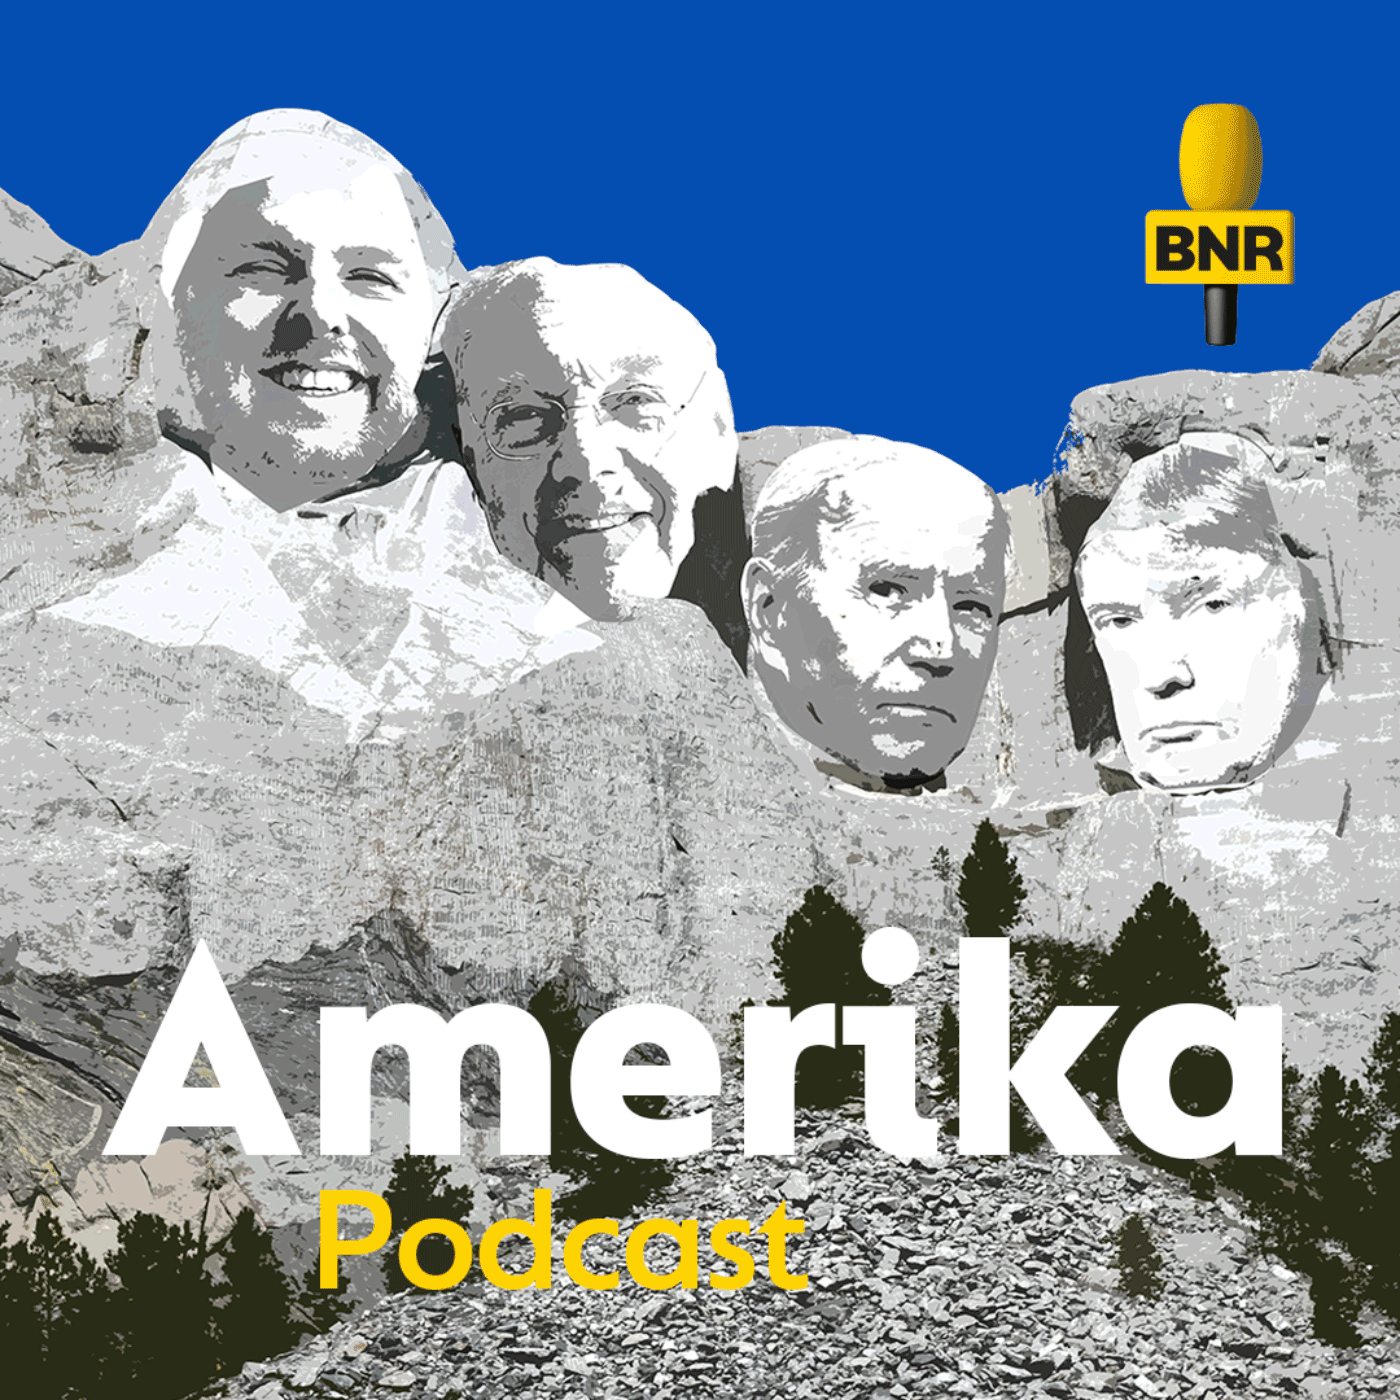 Amerika Podcast